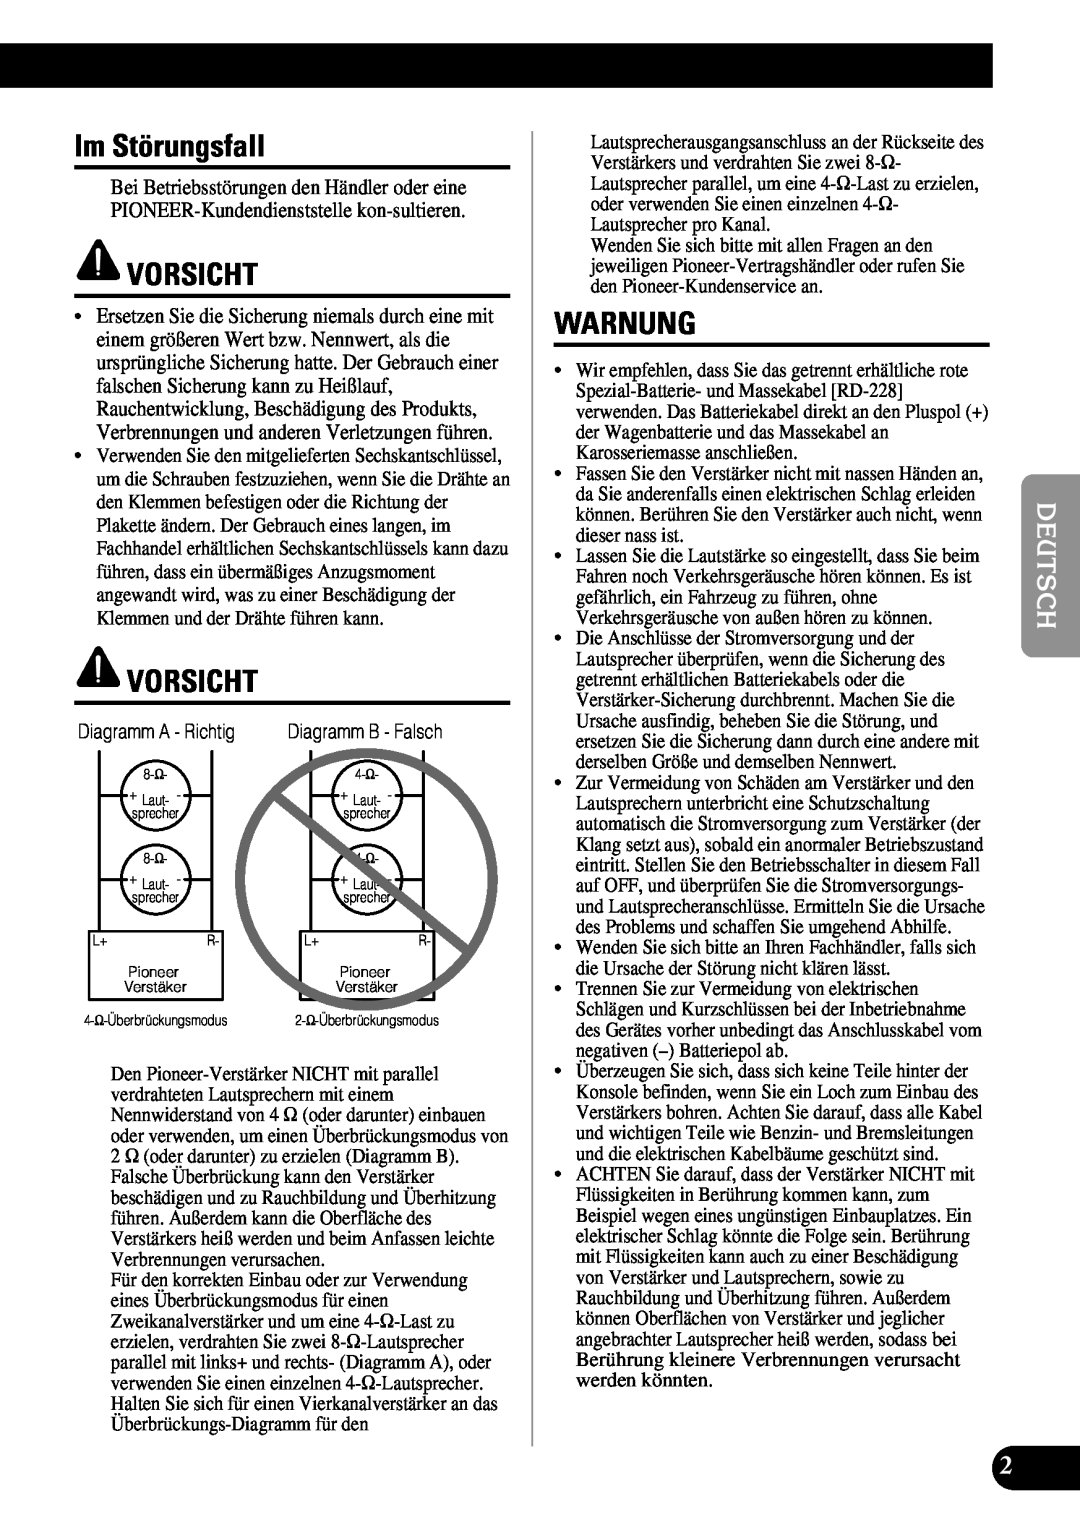 Pioneer PRS-A900 owner manual Im Störungsfall, Vorsicht, Warnung, Diagramm A - Richtig, Diagramm B - Falsch 